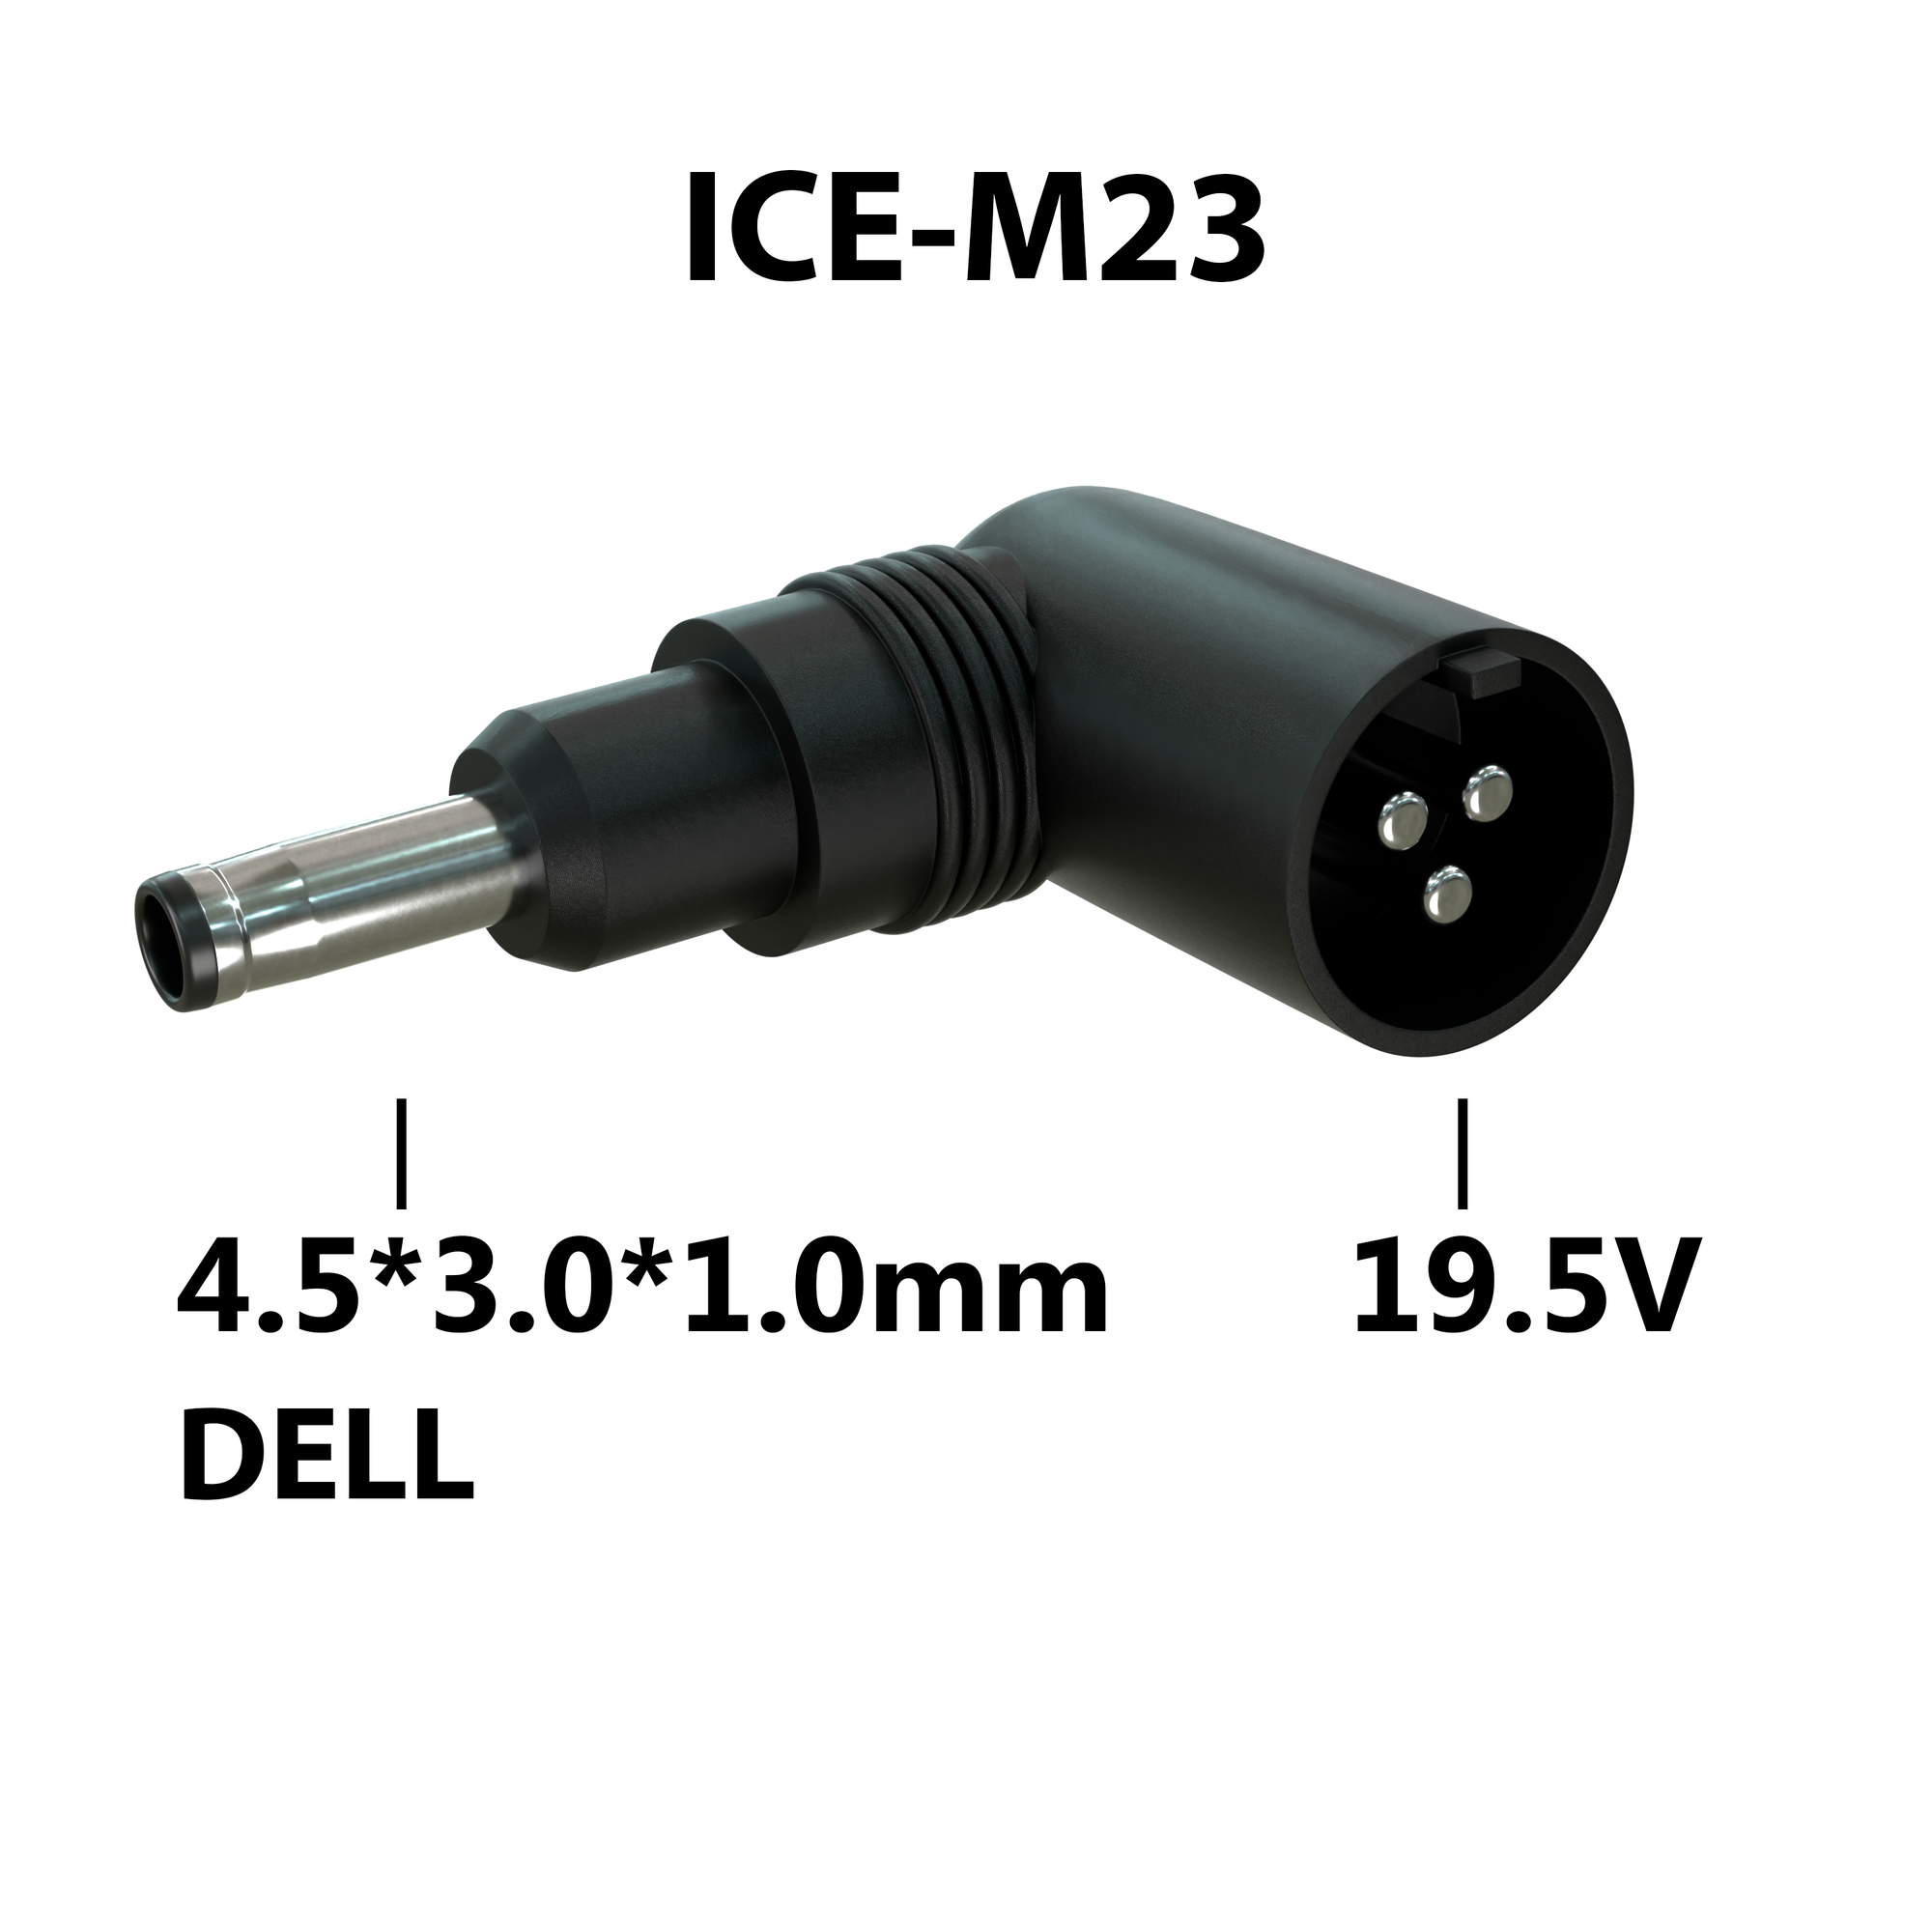 Коннектор адаптер переходник питания для ноутбука DELL ICEPAD ICE-M23 гнездо 3 pin 19,5V - штекер 4,5*3,0*1,0mm, угловой